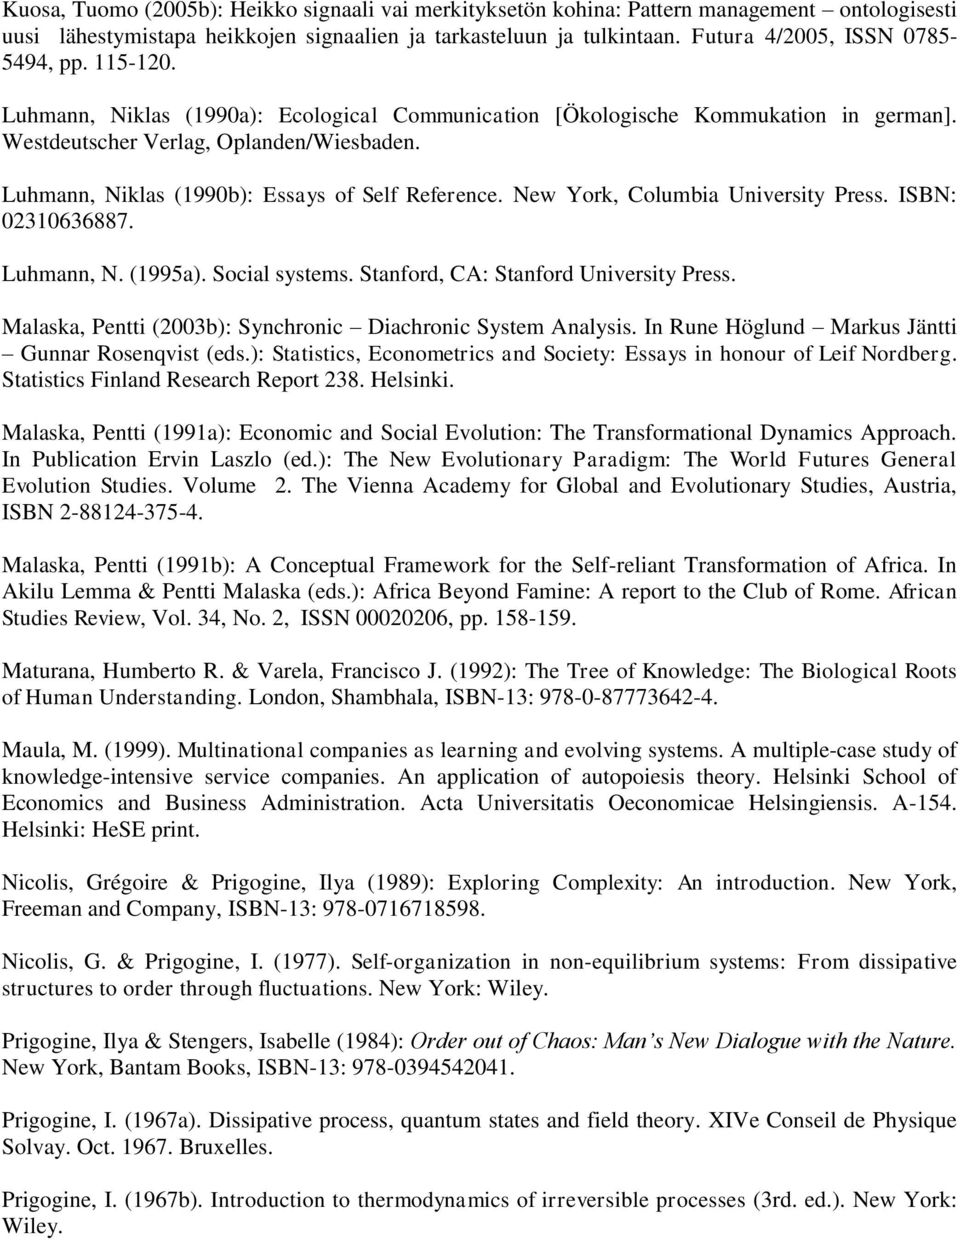 Luhmann, Niklas (1990b): Essays of Self Reference. New York, Columbia University Press. ISBN: 02310636887. Luhmann, N. (1995a). Social systems. Stanford, CA: Stanford University Press.